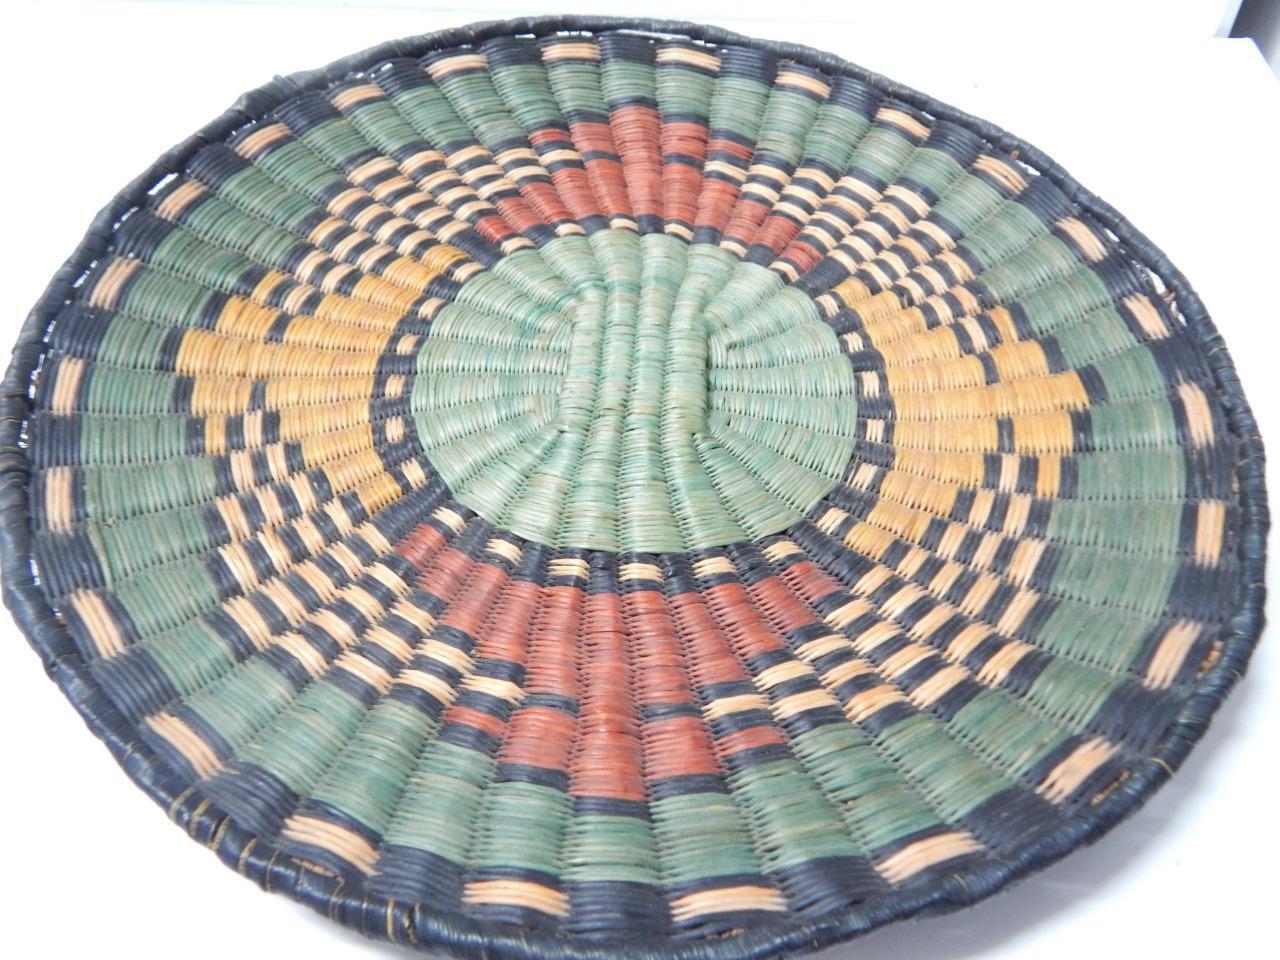 Exceptional Antique Vintage Hopi Indian Wicker Basket Tray - Nice Color + Patina